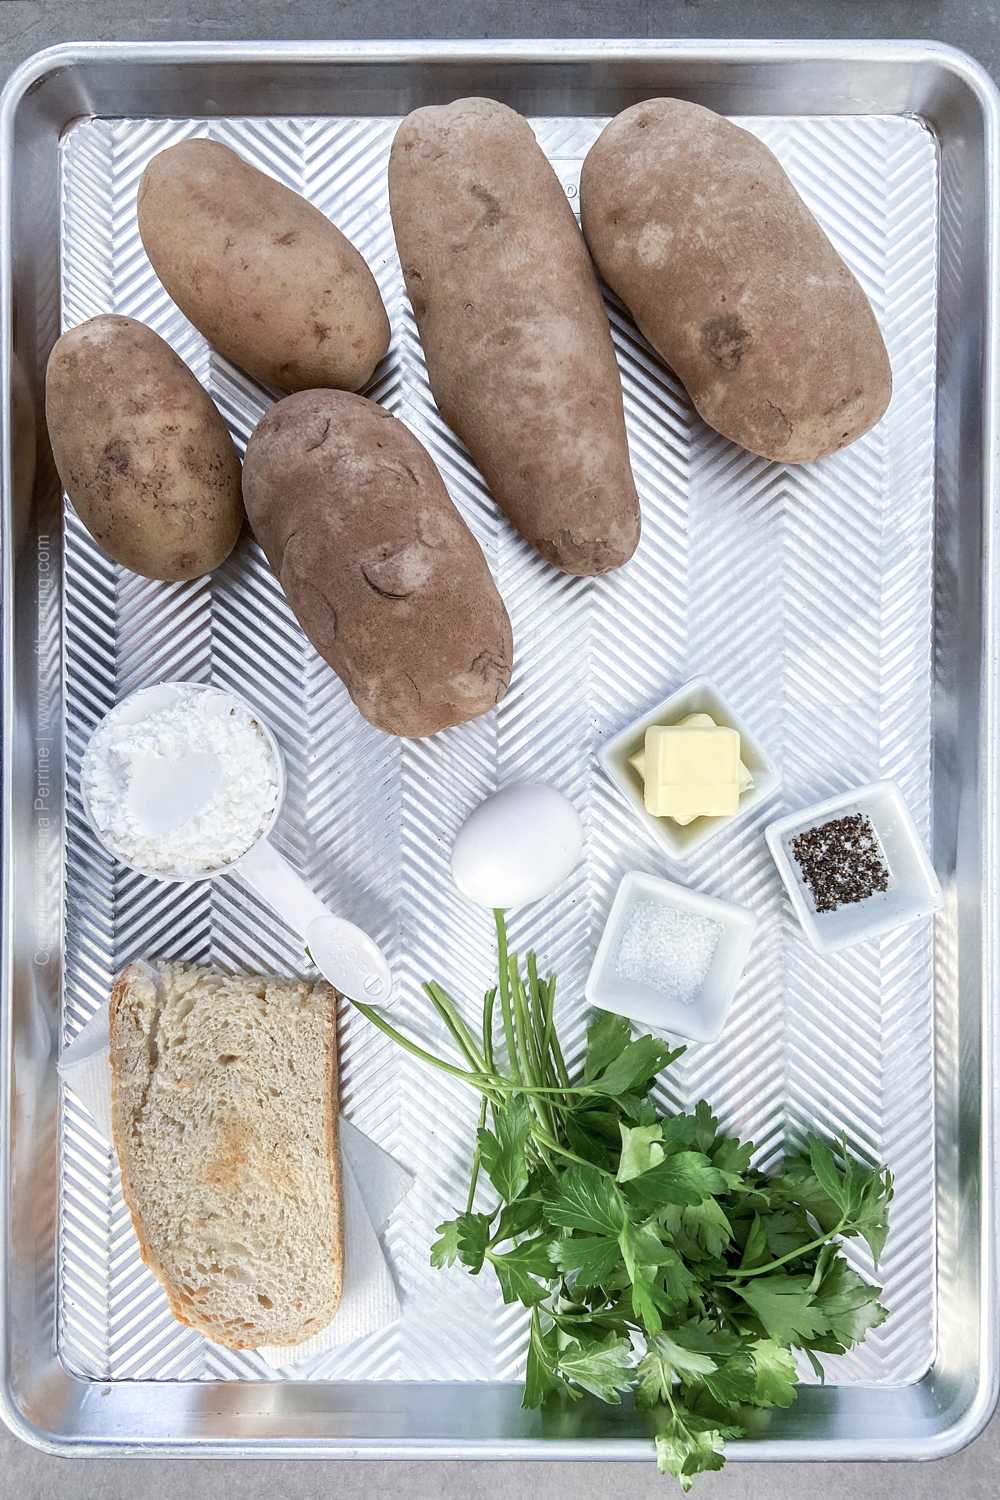 Ingredients for German potato dumplings - starchy potatoes, egg, corn starch or flour,, salt and pepper